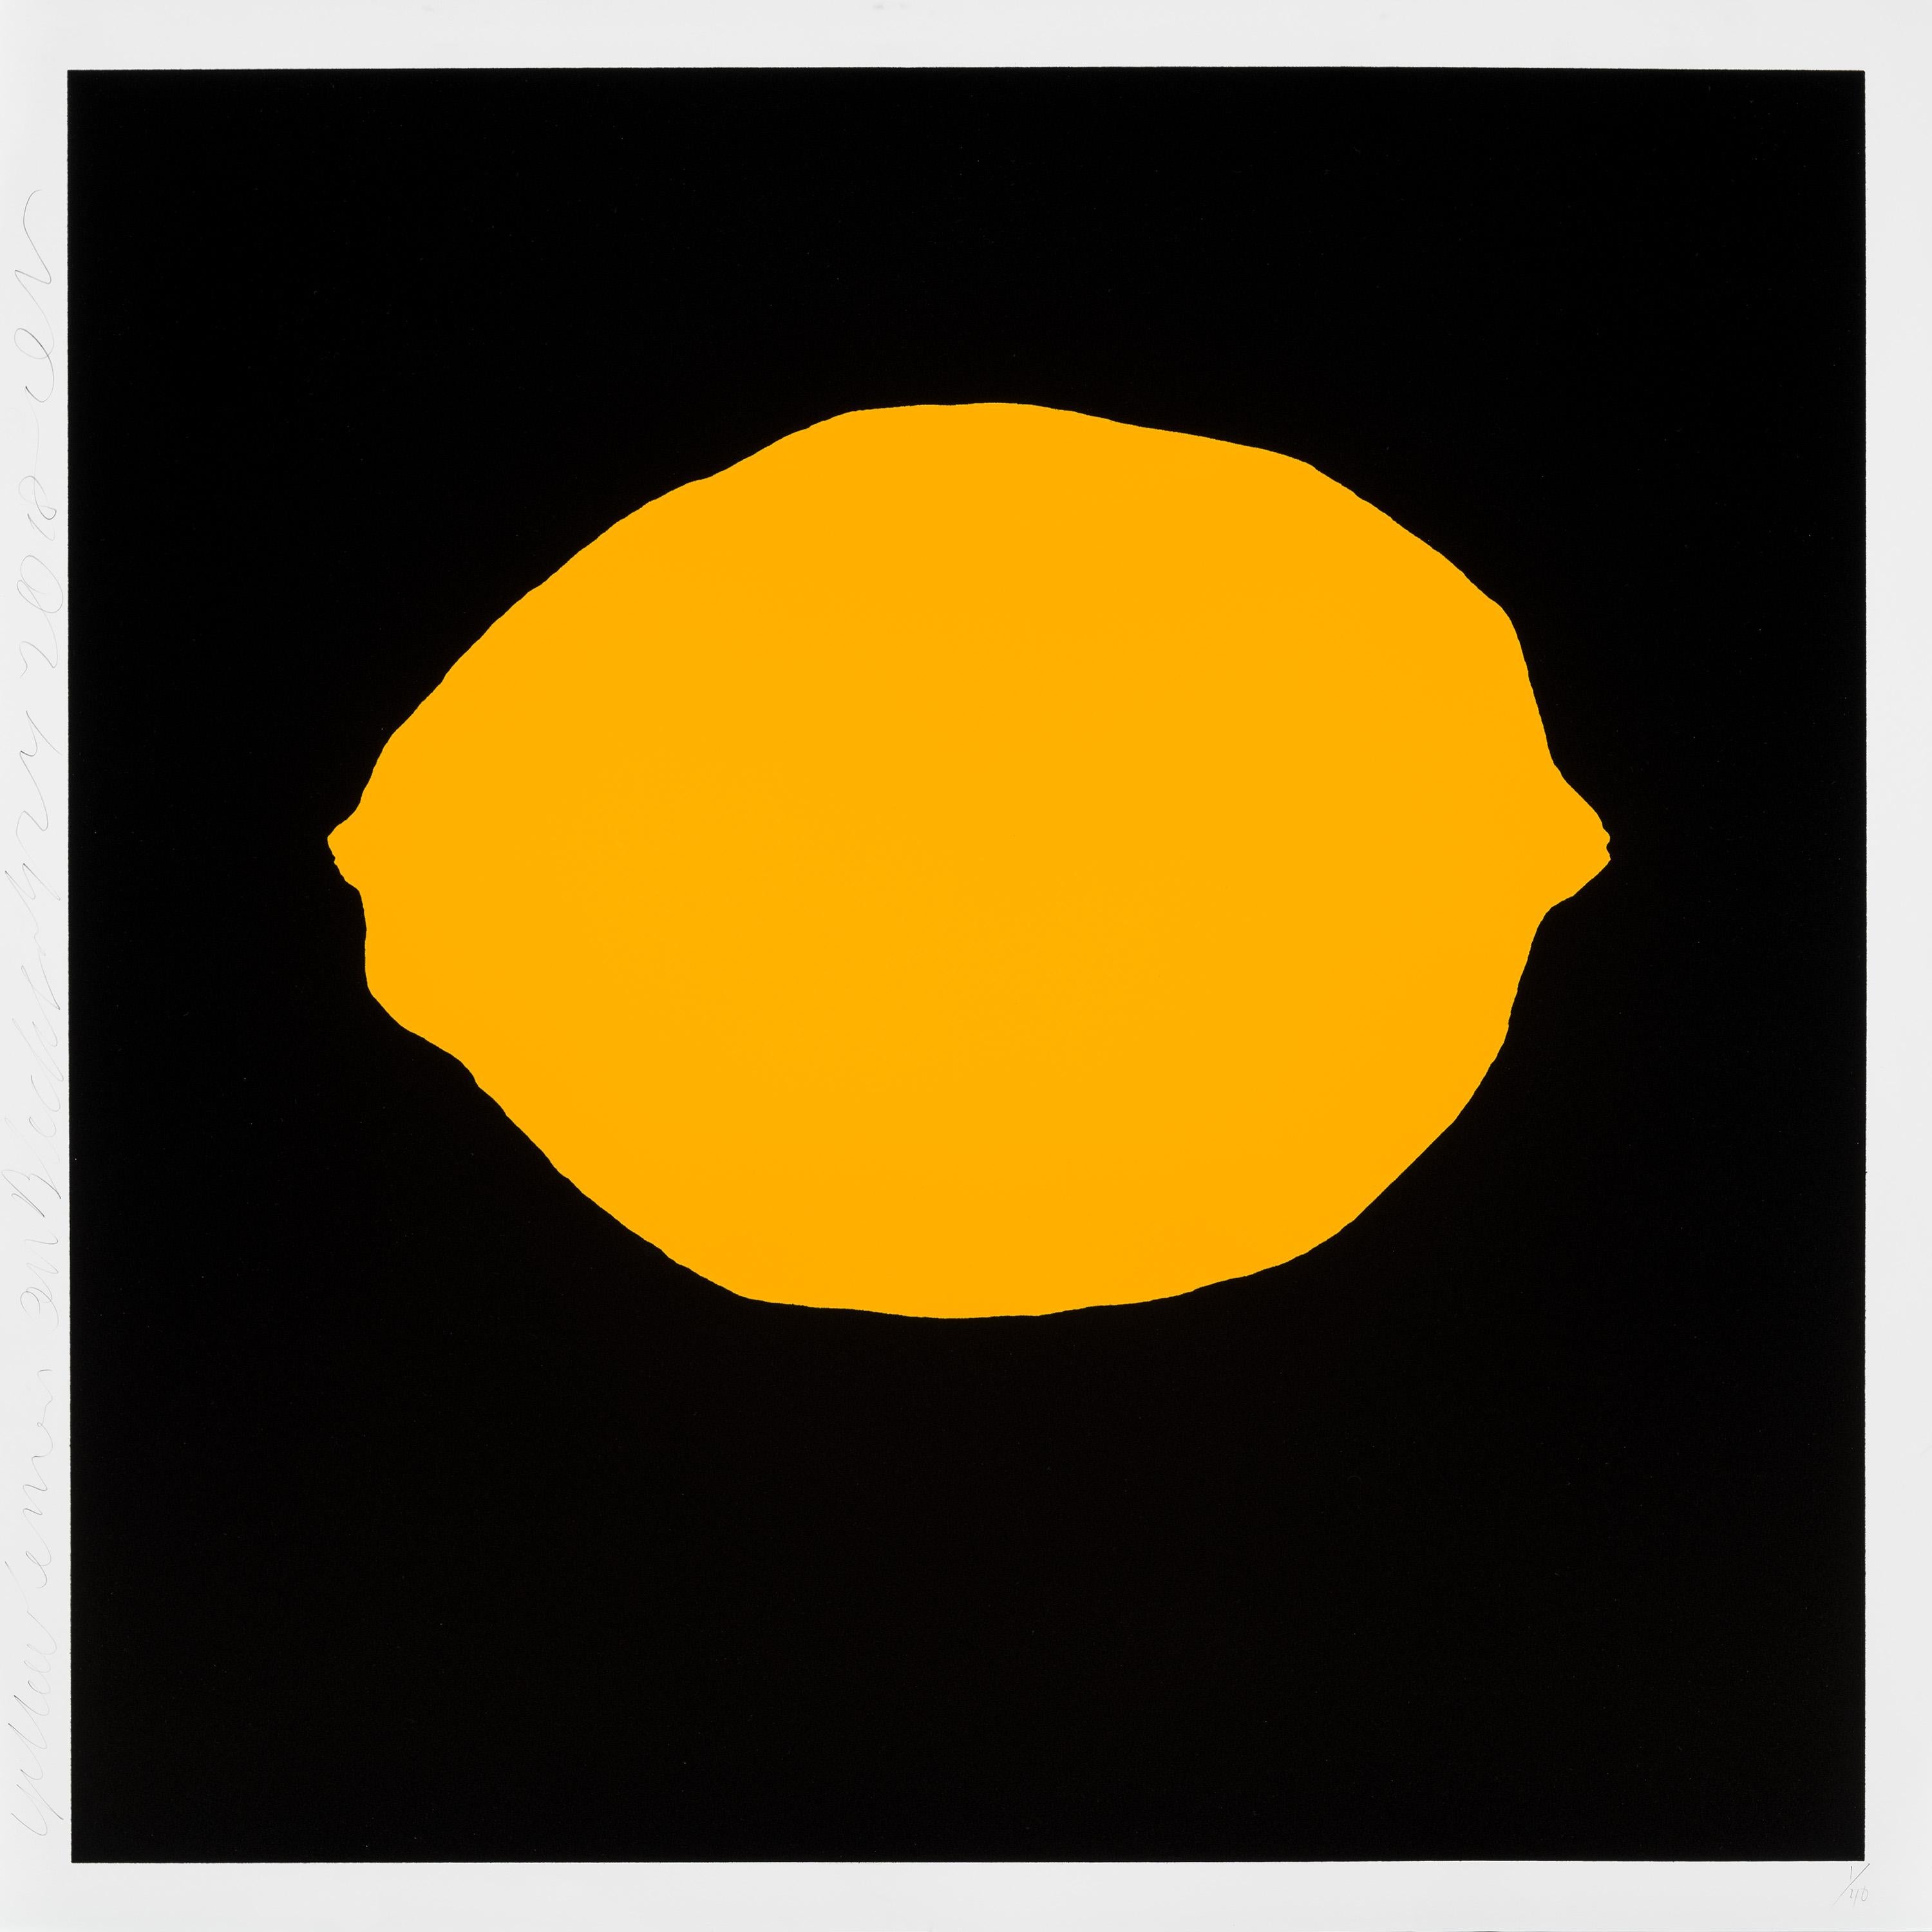 Yellow Lemon on Black, 2018, Color silkscreen with enamel inks